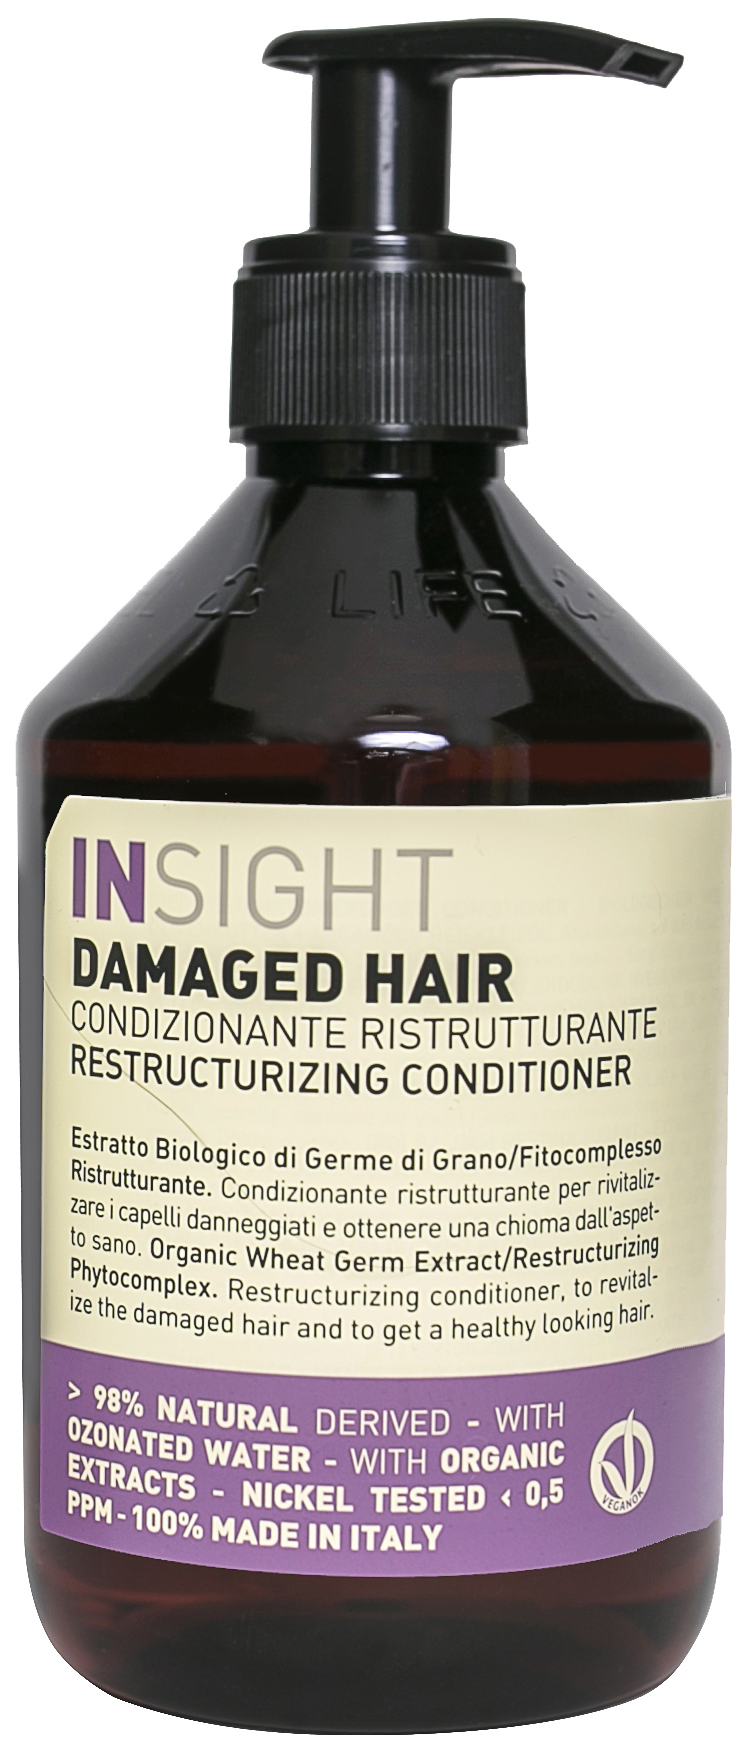 Кондиционер для волос Insight Damaged Hair Restructurizing Conditioner 400 мл